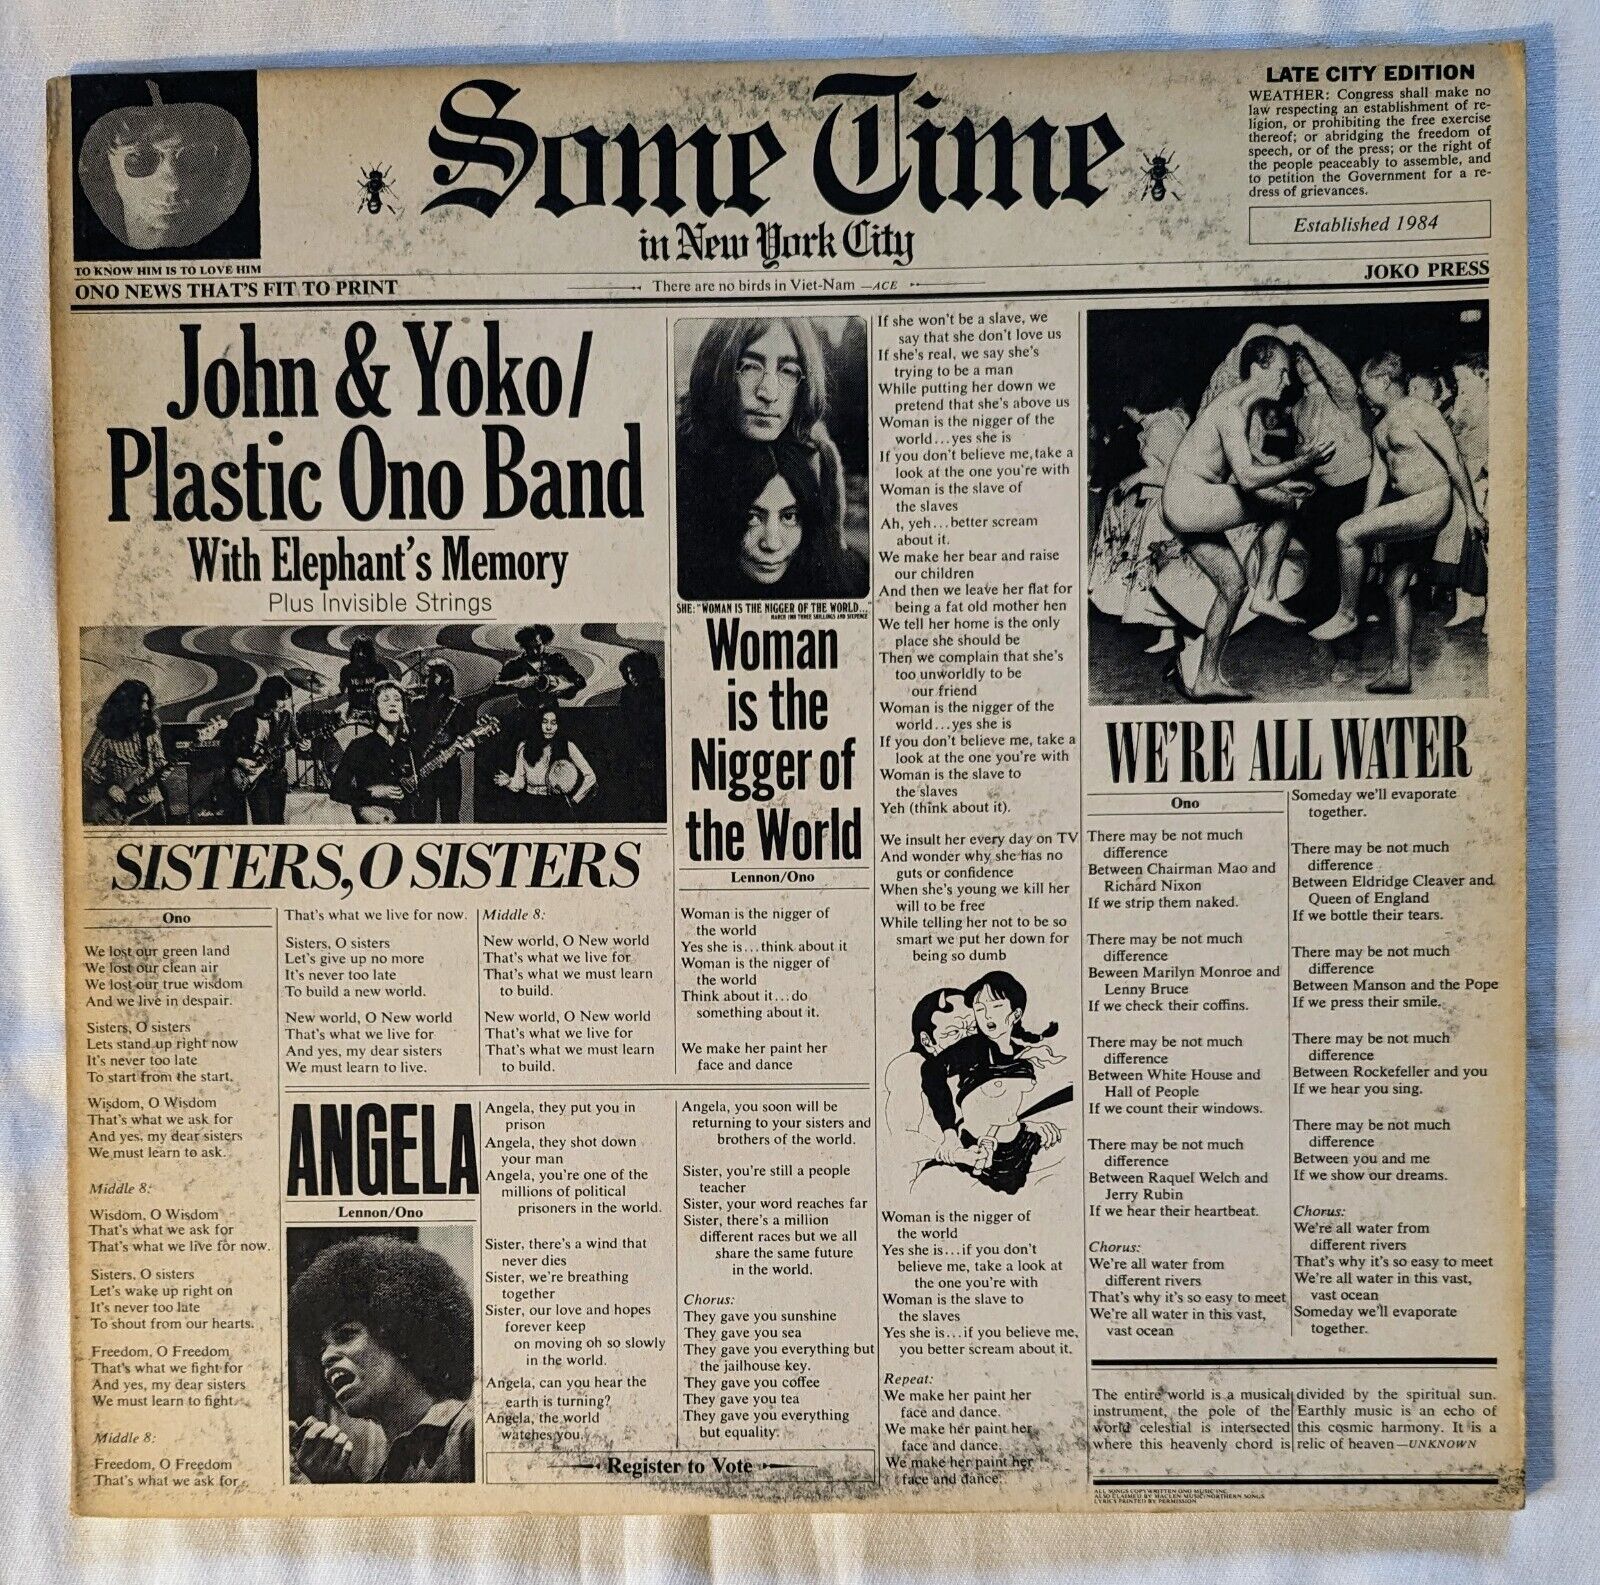 John & Yoko/Plastic Ono Band Some Time in New York City 2LP APPLE SVBB 3392